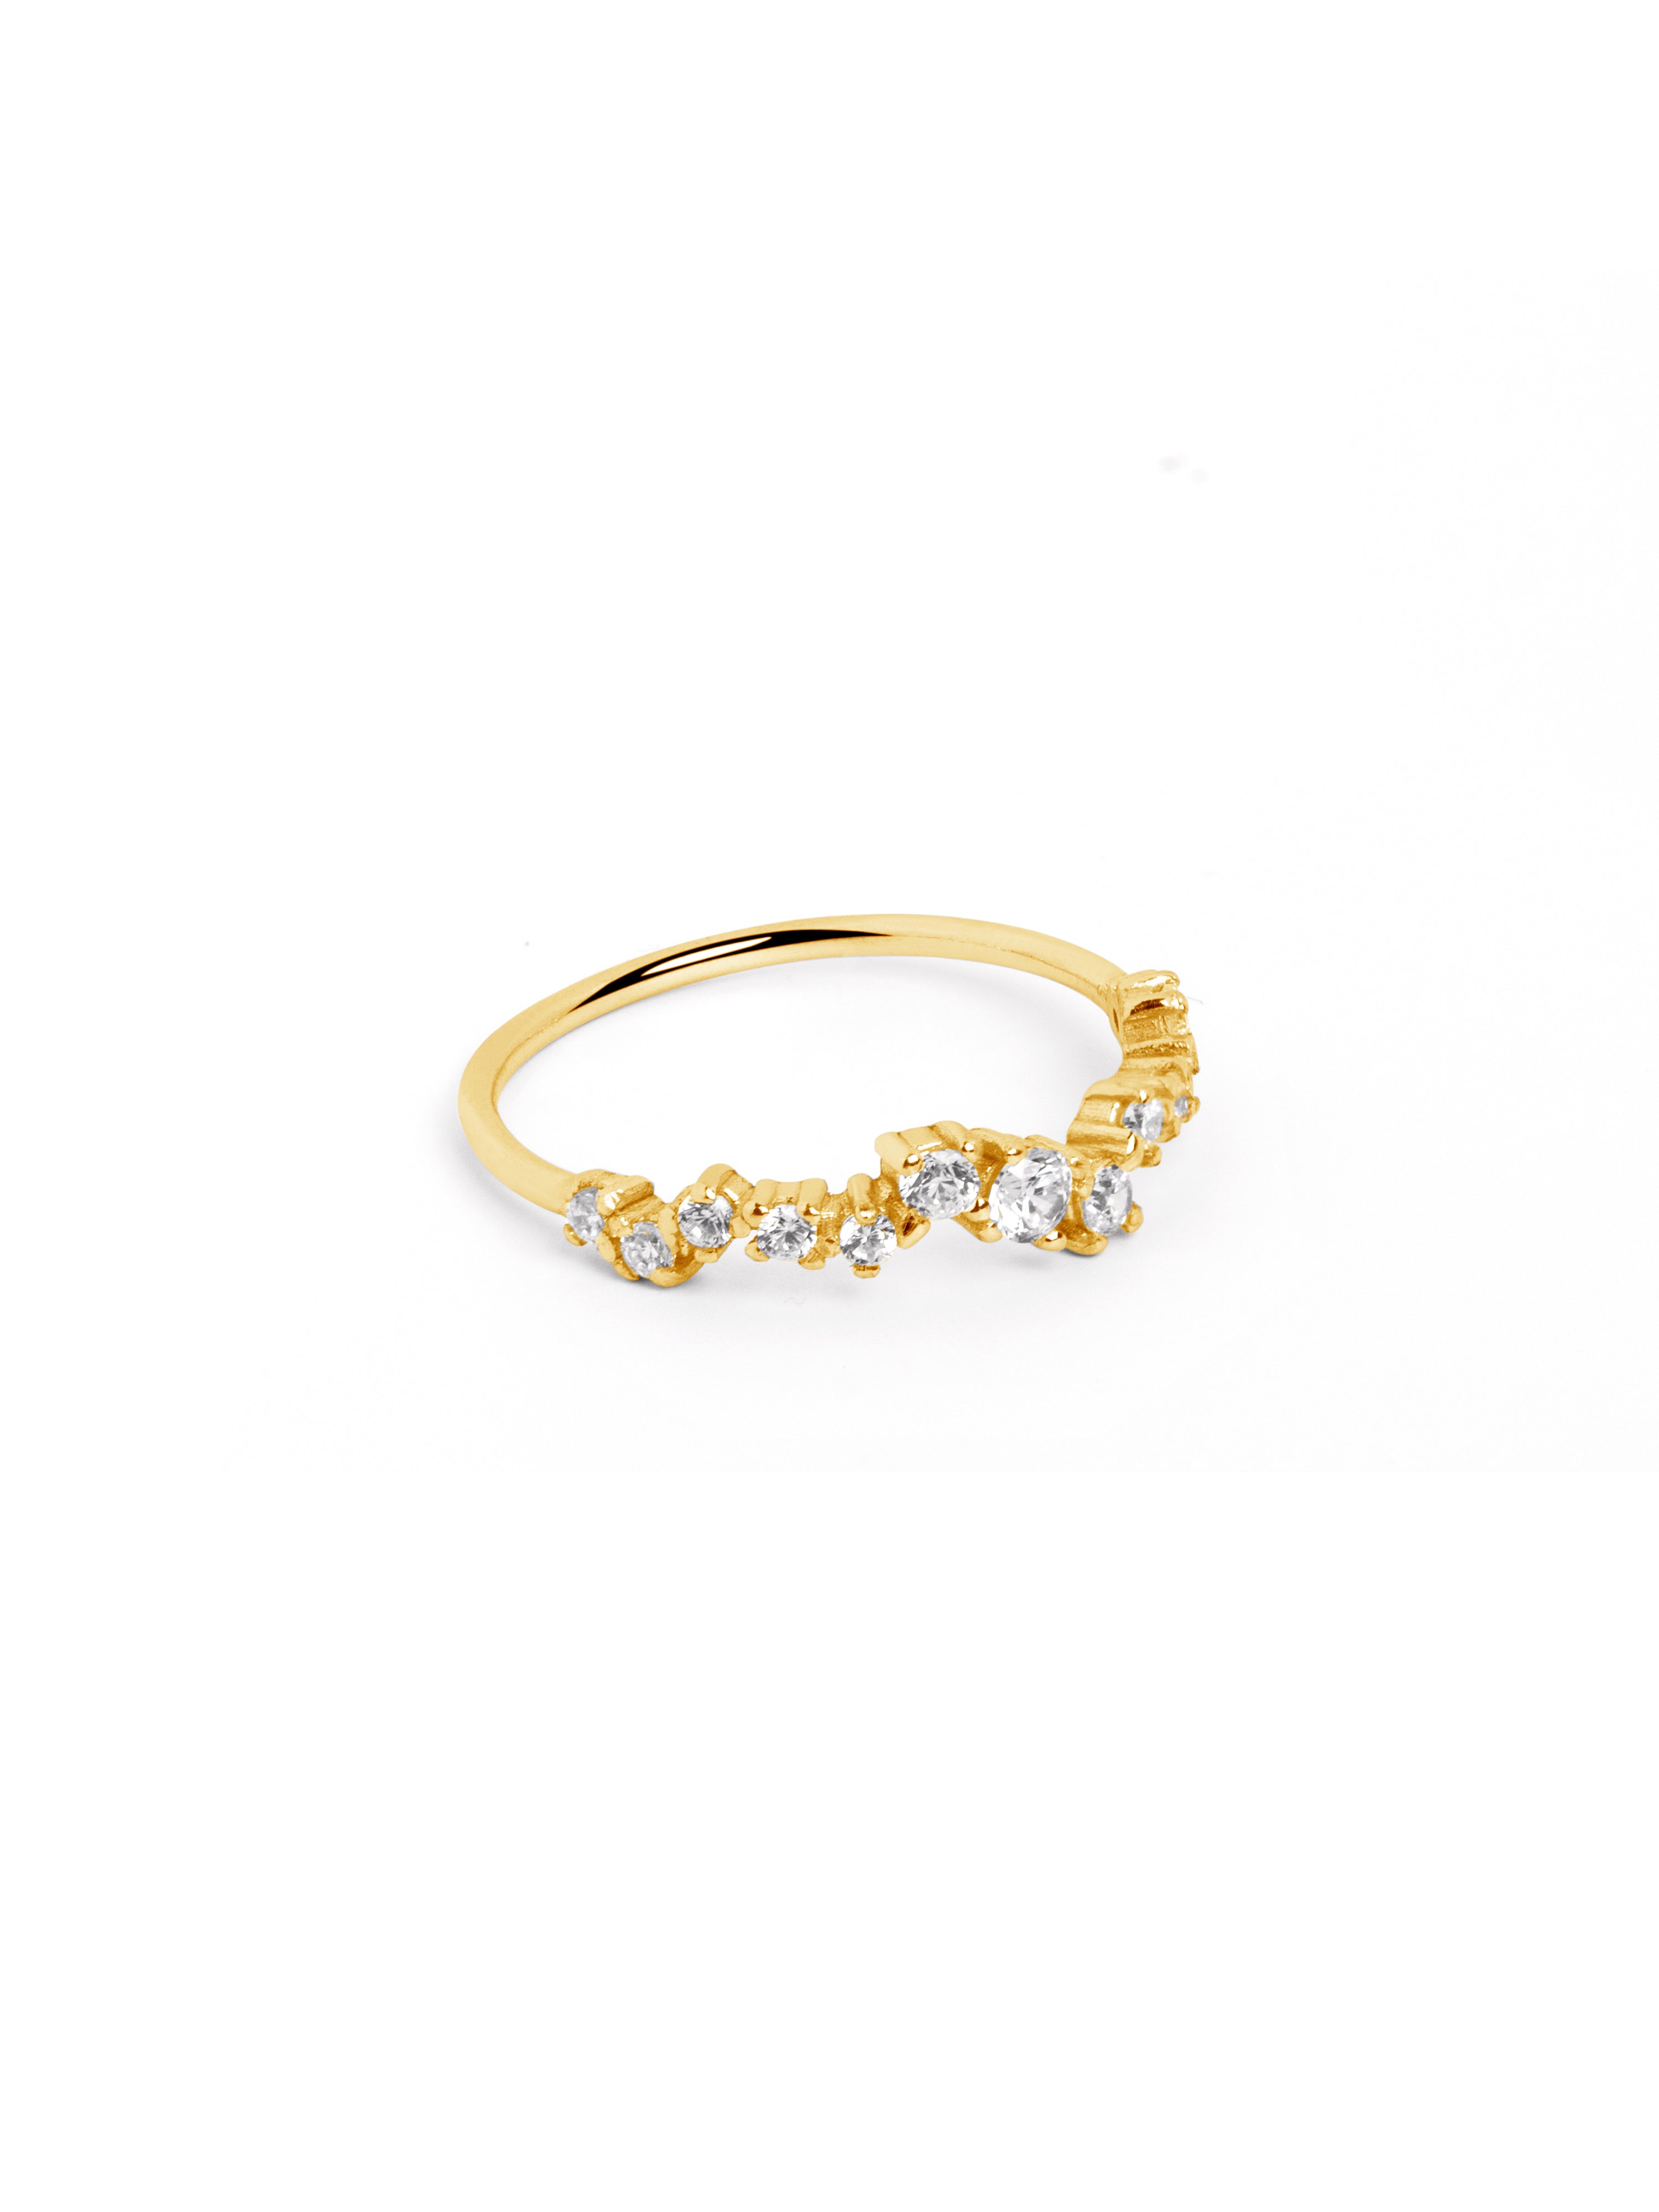 Estellar Gold Ring